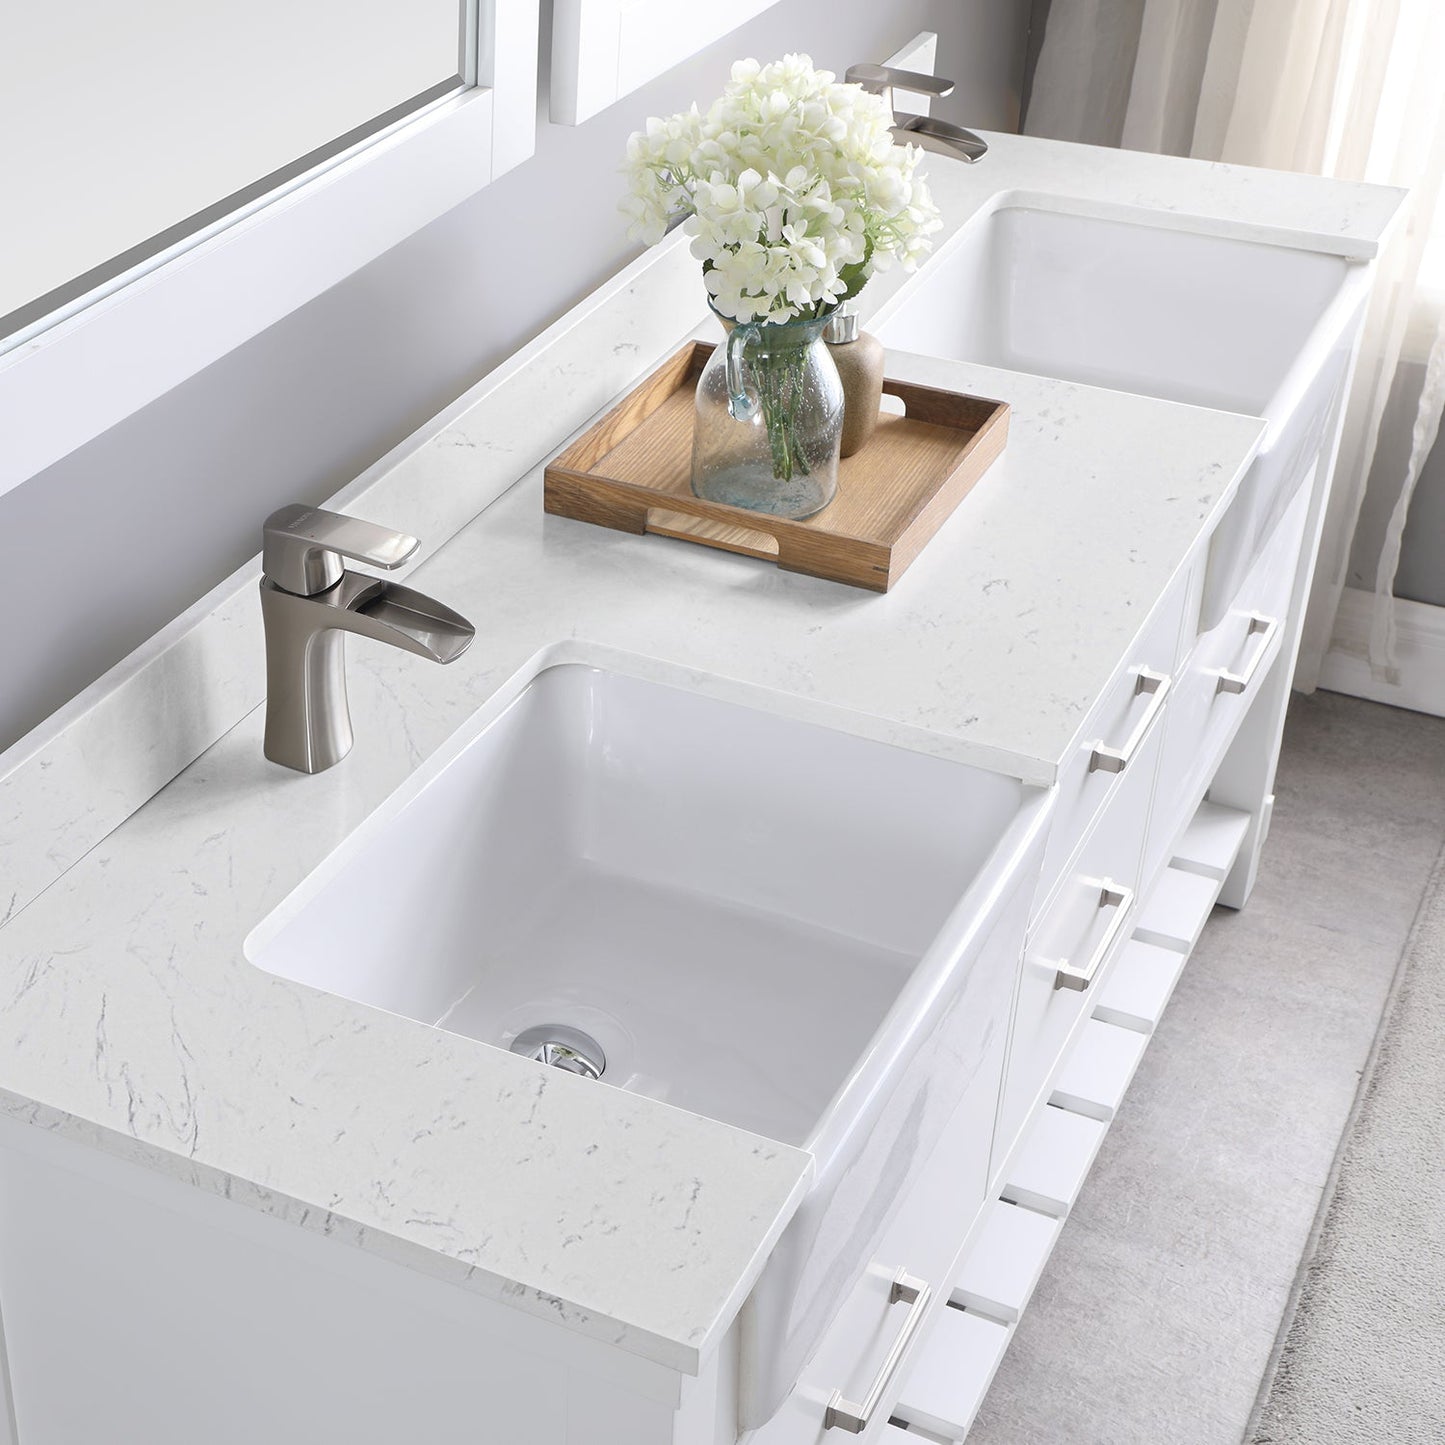 Georgia 72" Double Bathroom Vanity Set in White and Composite Carrara White Stone Top with White Farmhouse Basin with Mirror